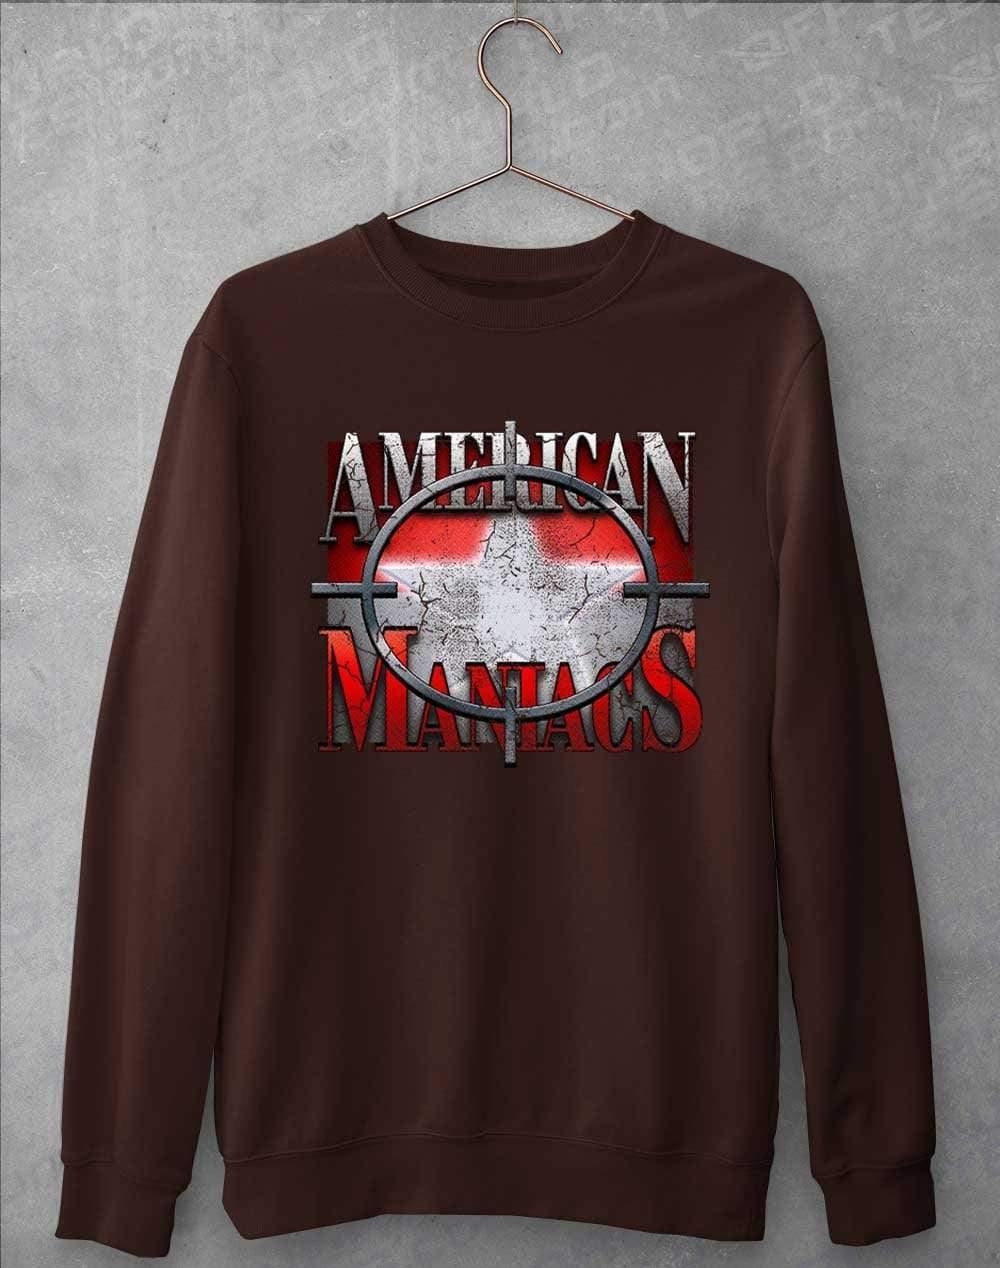 American Maniacs - Sweatshirt S / Hot Chocolate  - Off World Tees